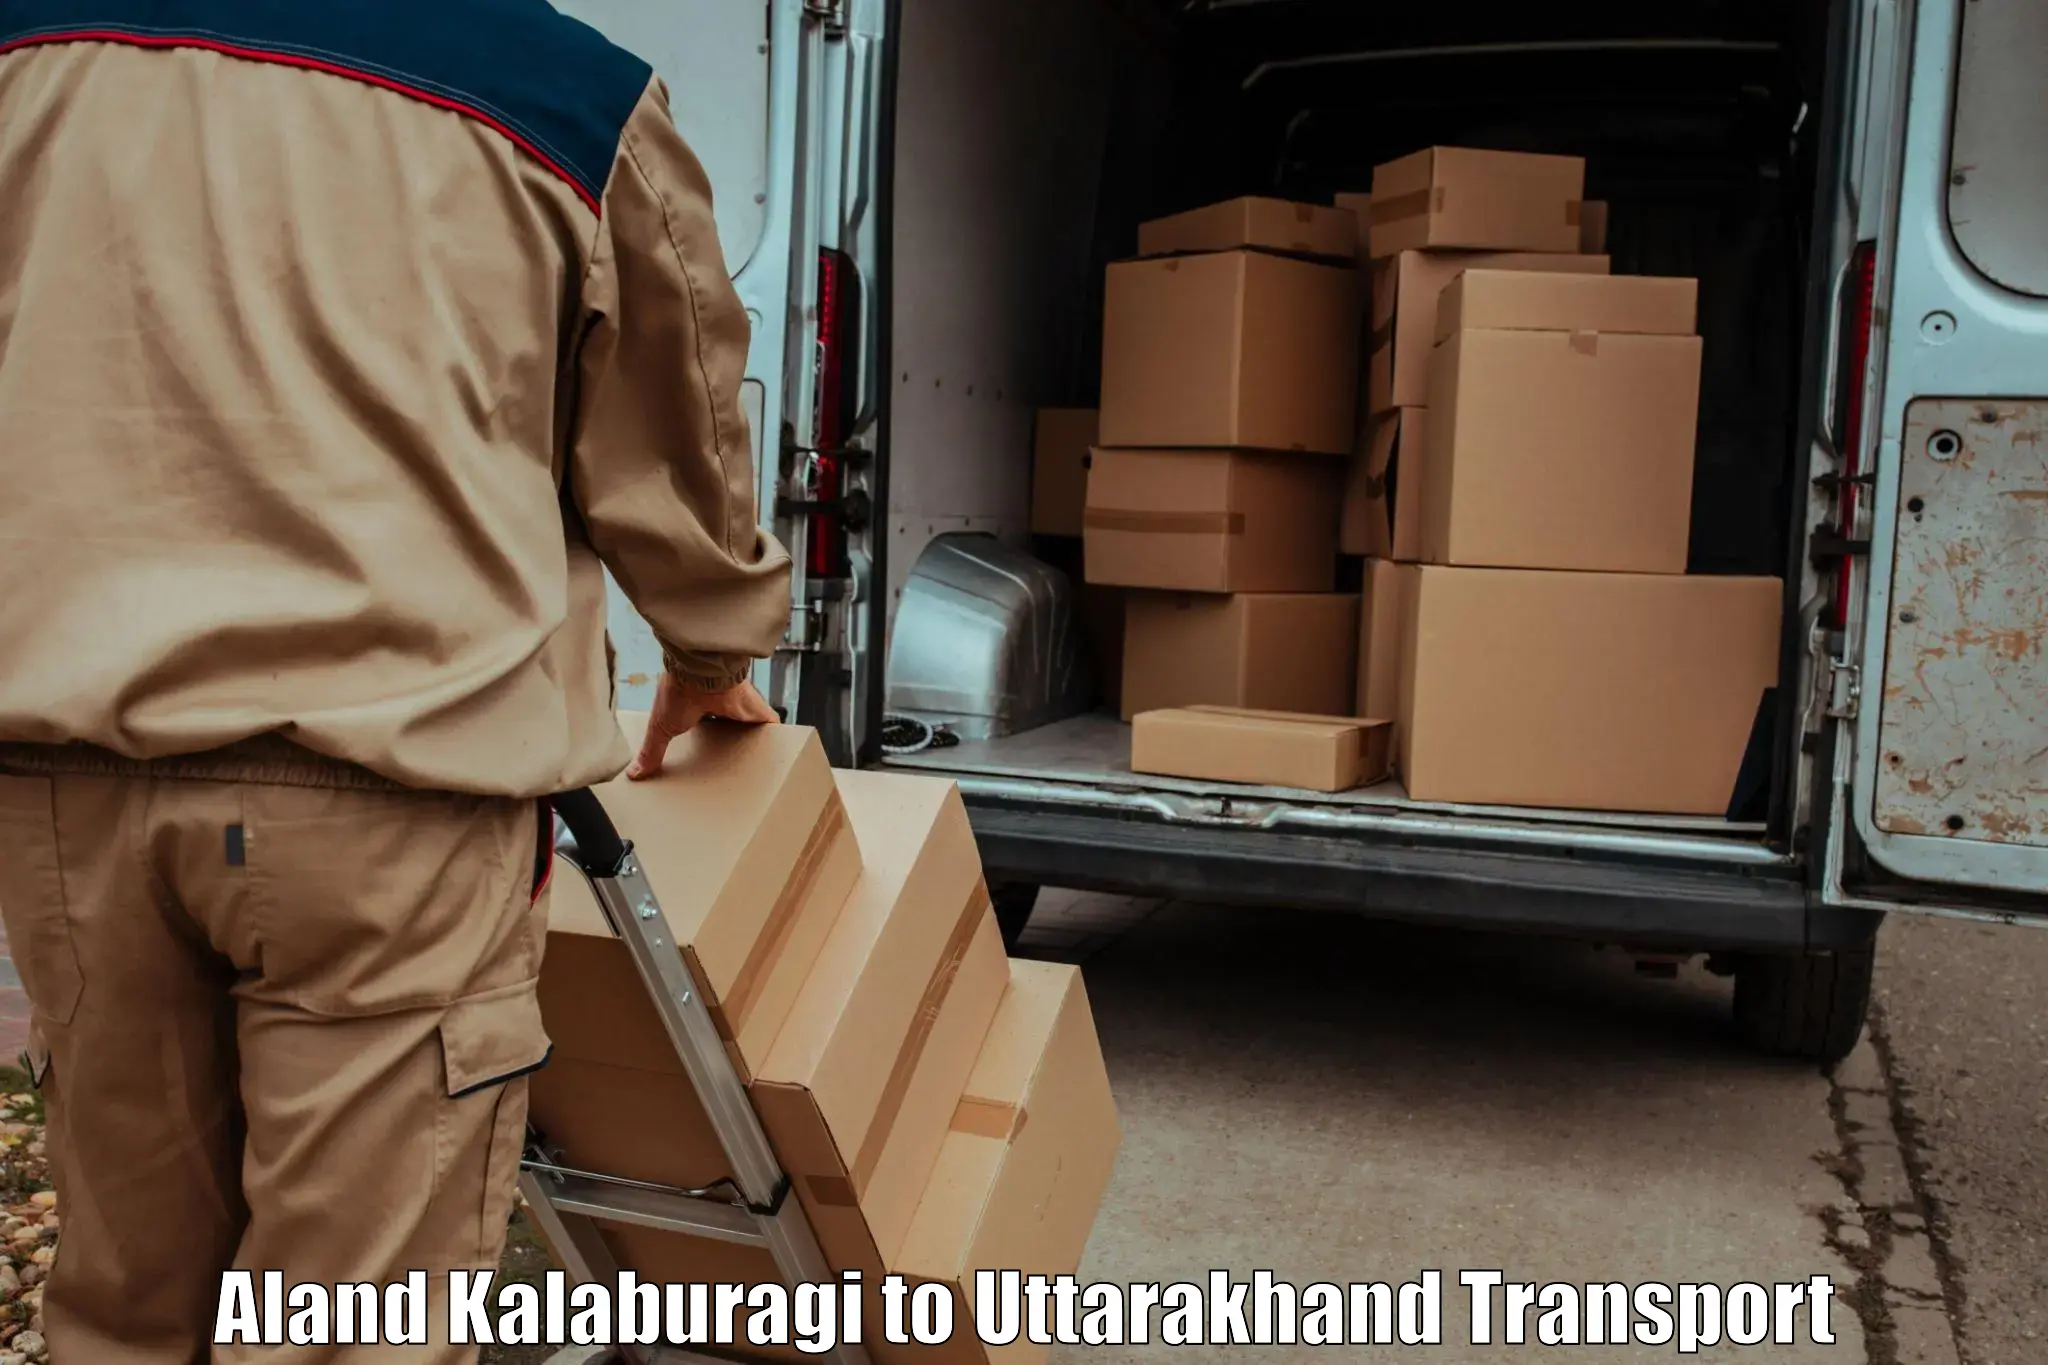 Daily transport service Aland Kalaburagi to IIT Roorkee